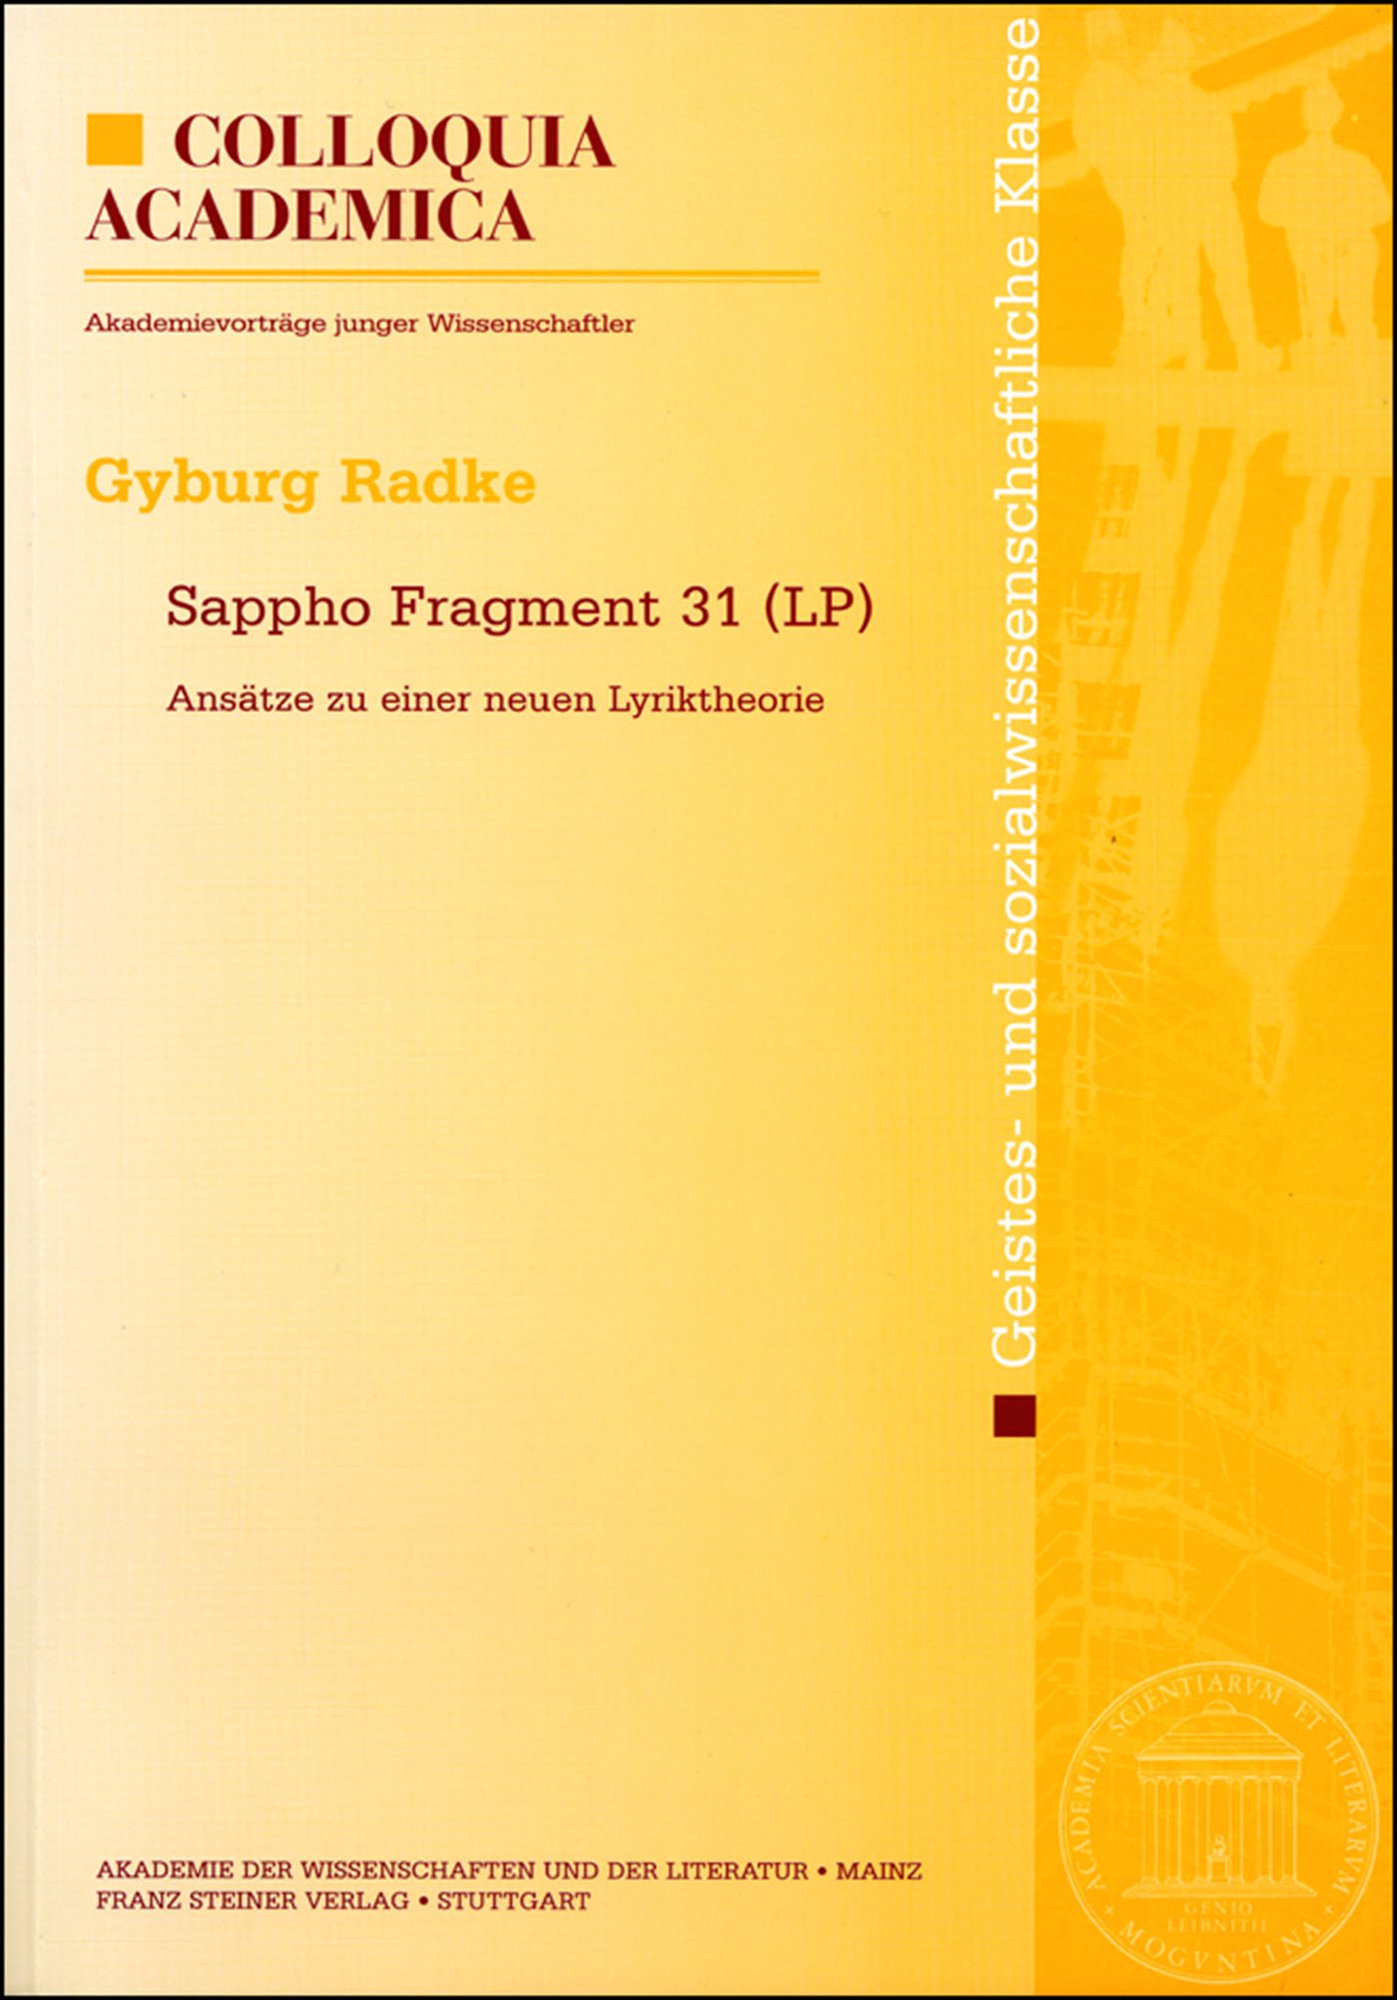 Sappho Fragment 31 (LP)